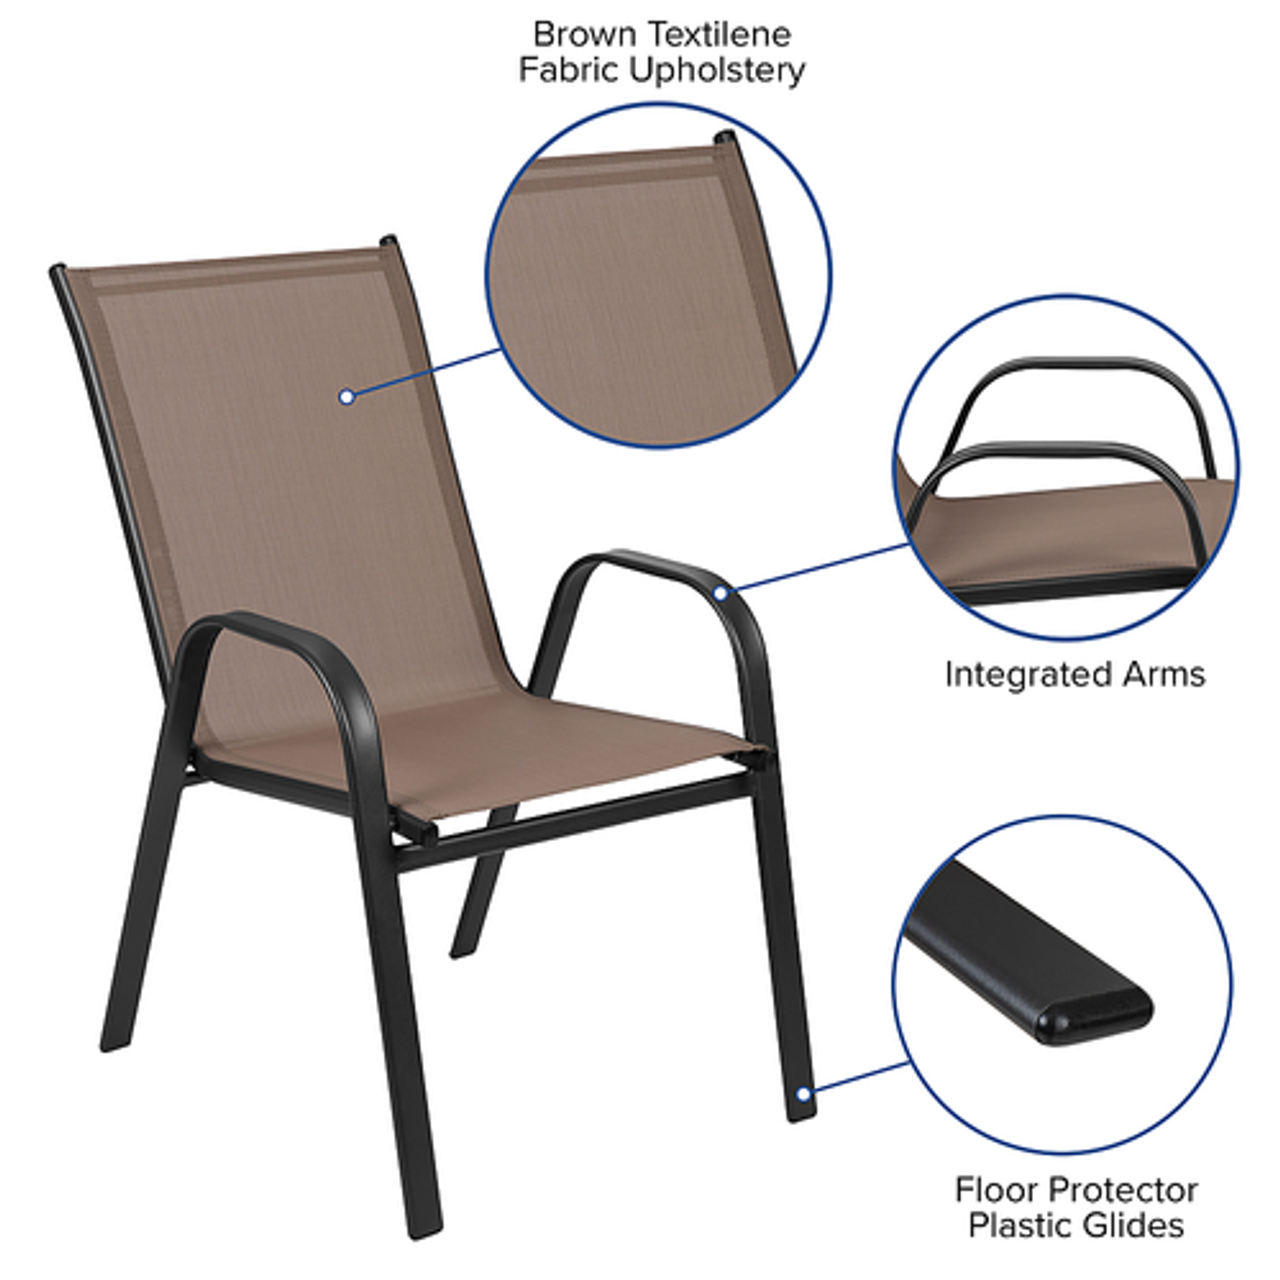 Flash Furniture - Brazos Patio Chair (set of 4) - Brown